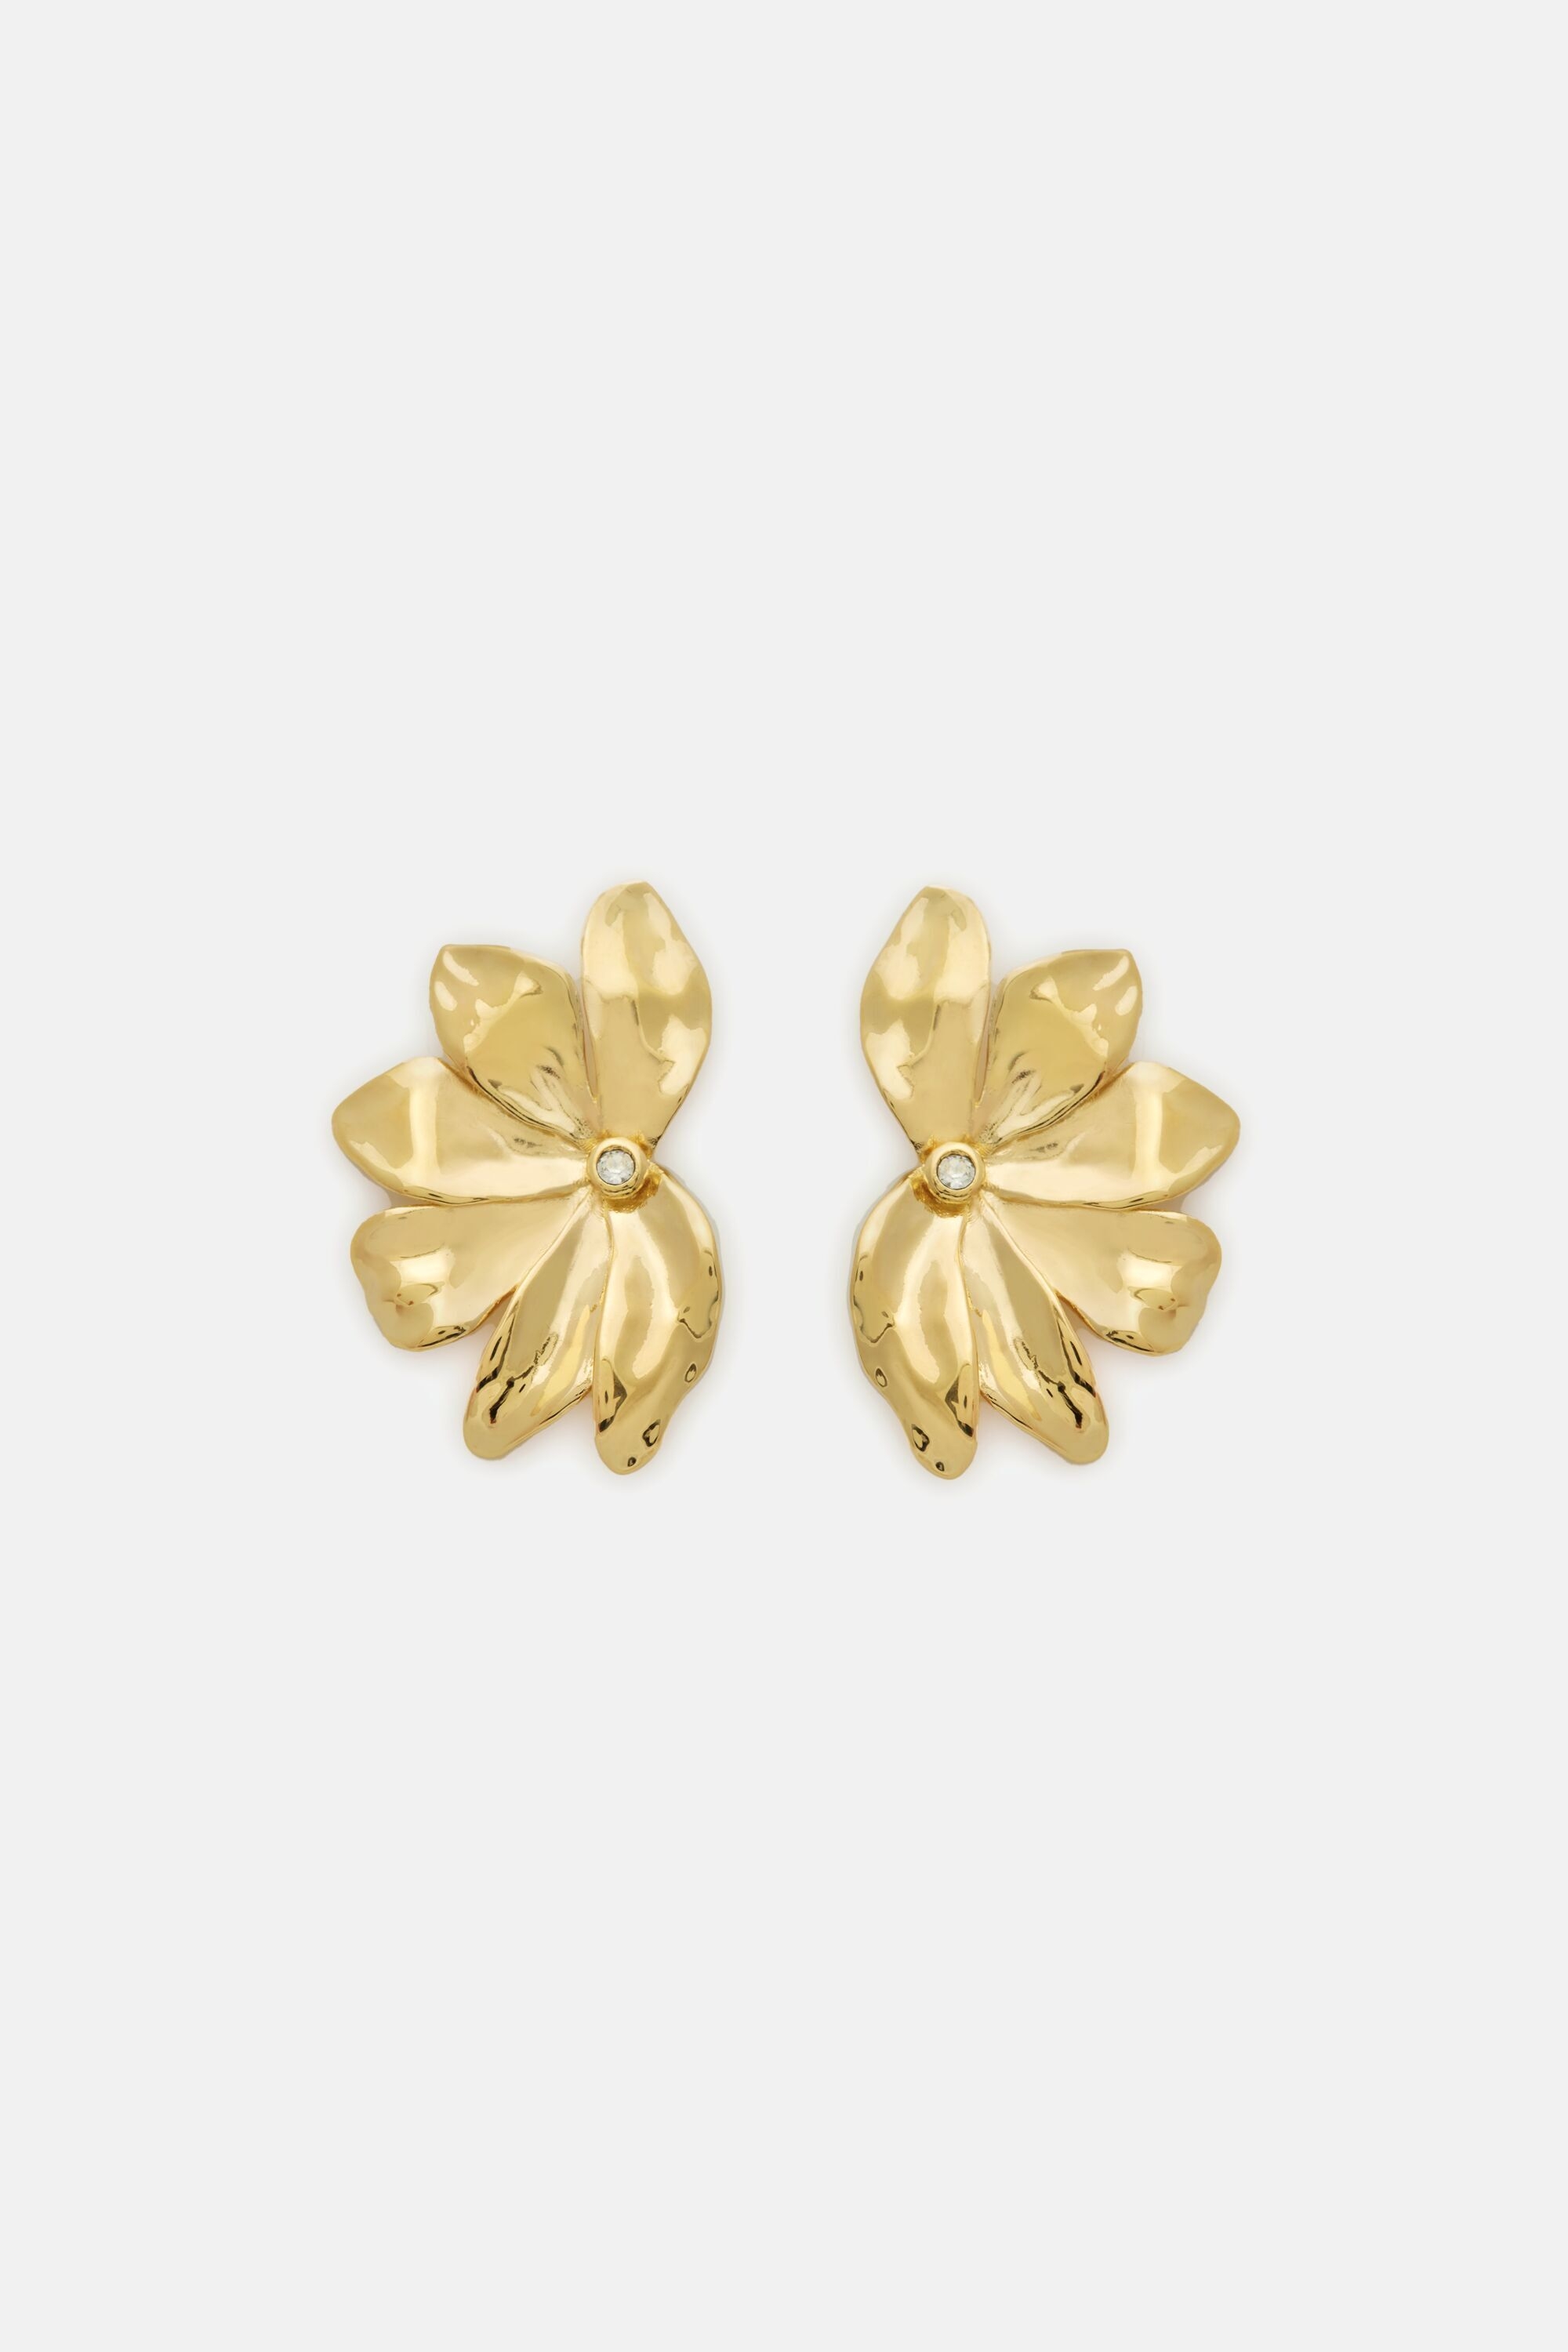 Jasmine earrings